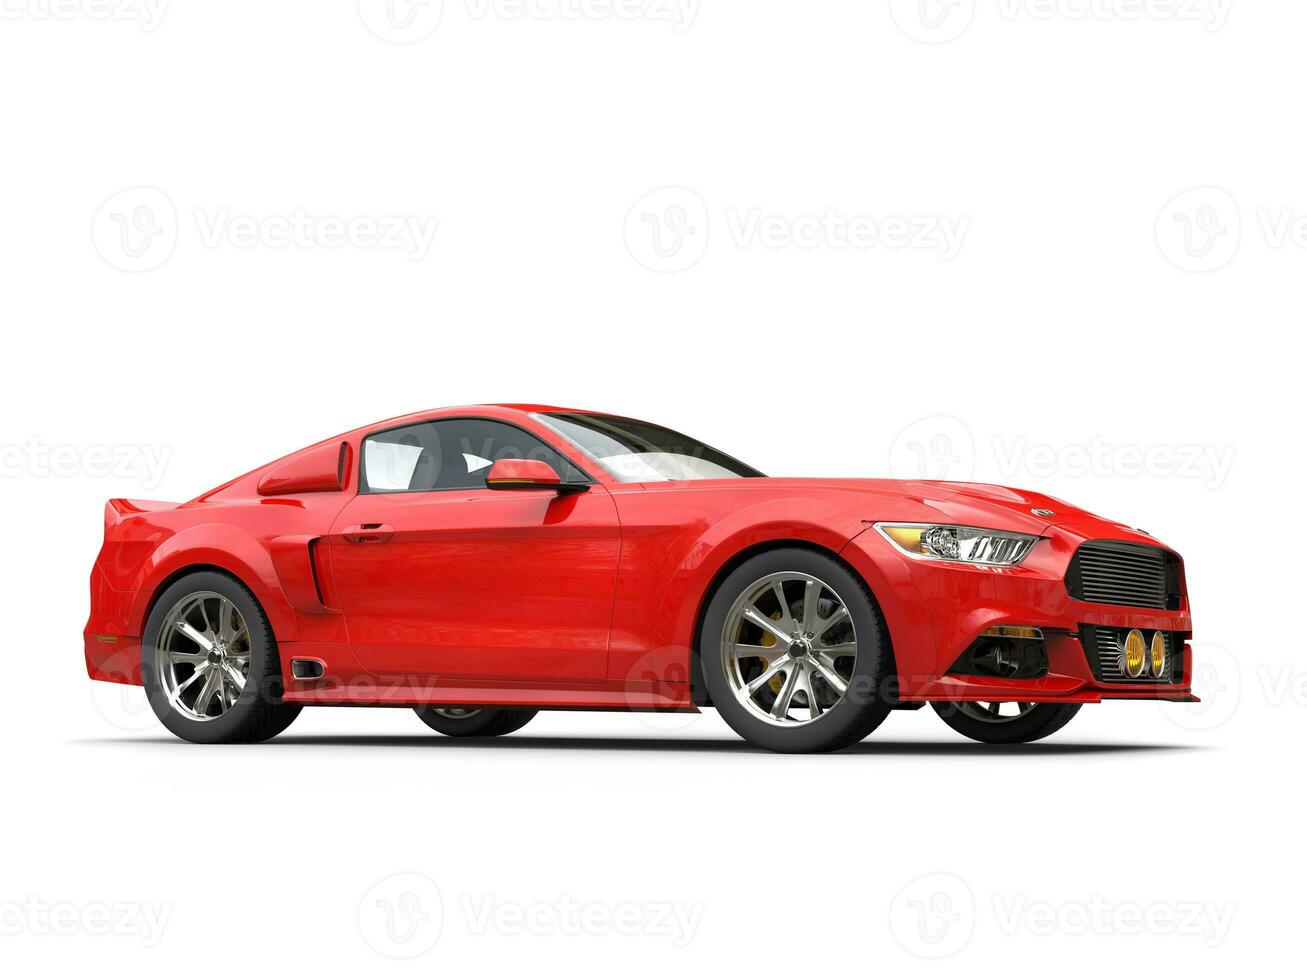 chaud rouge moderne Urbain muscle voiture - beauté coup photo